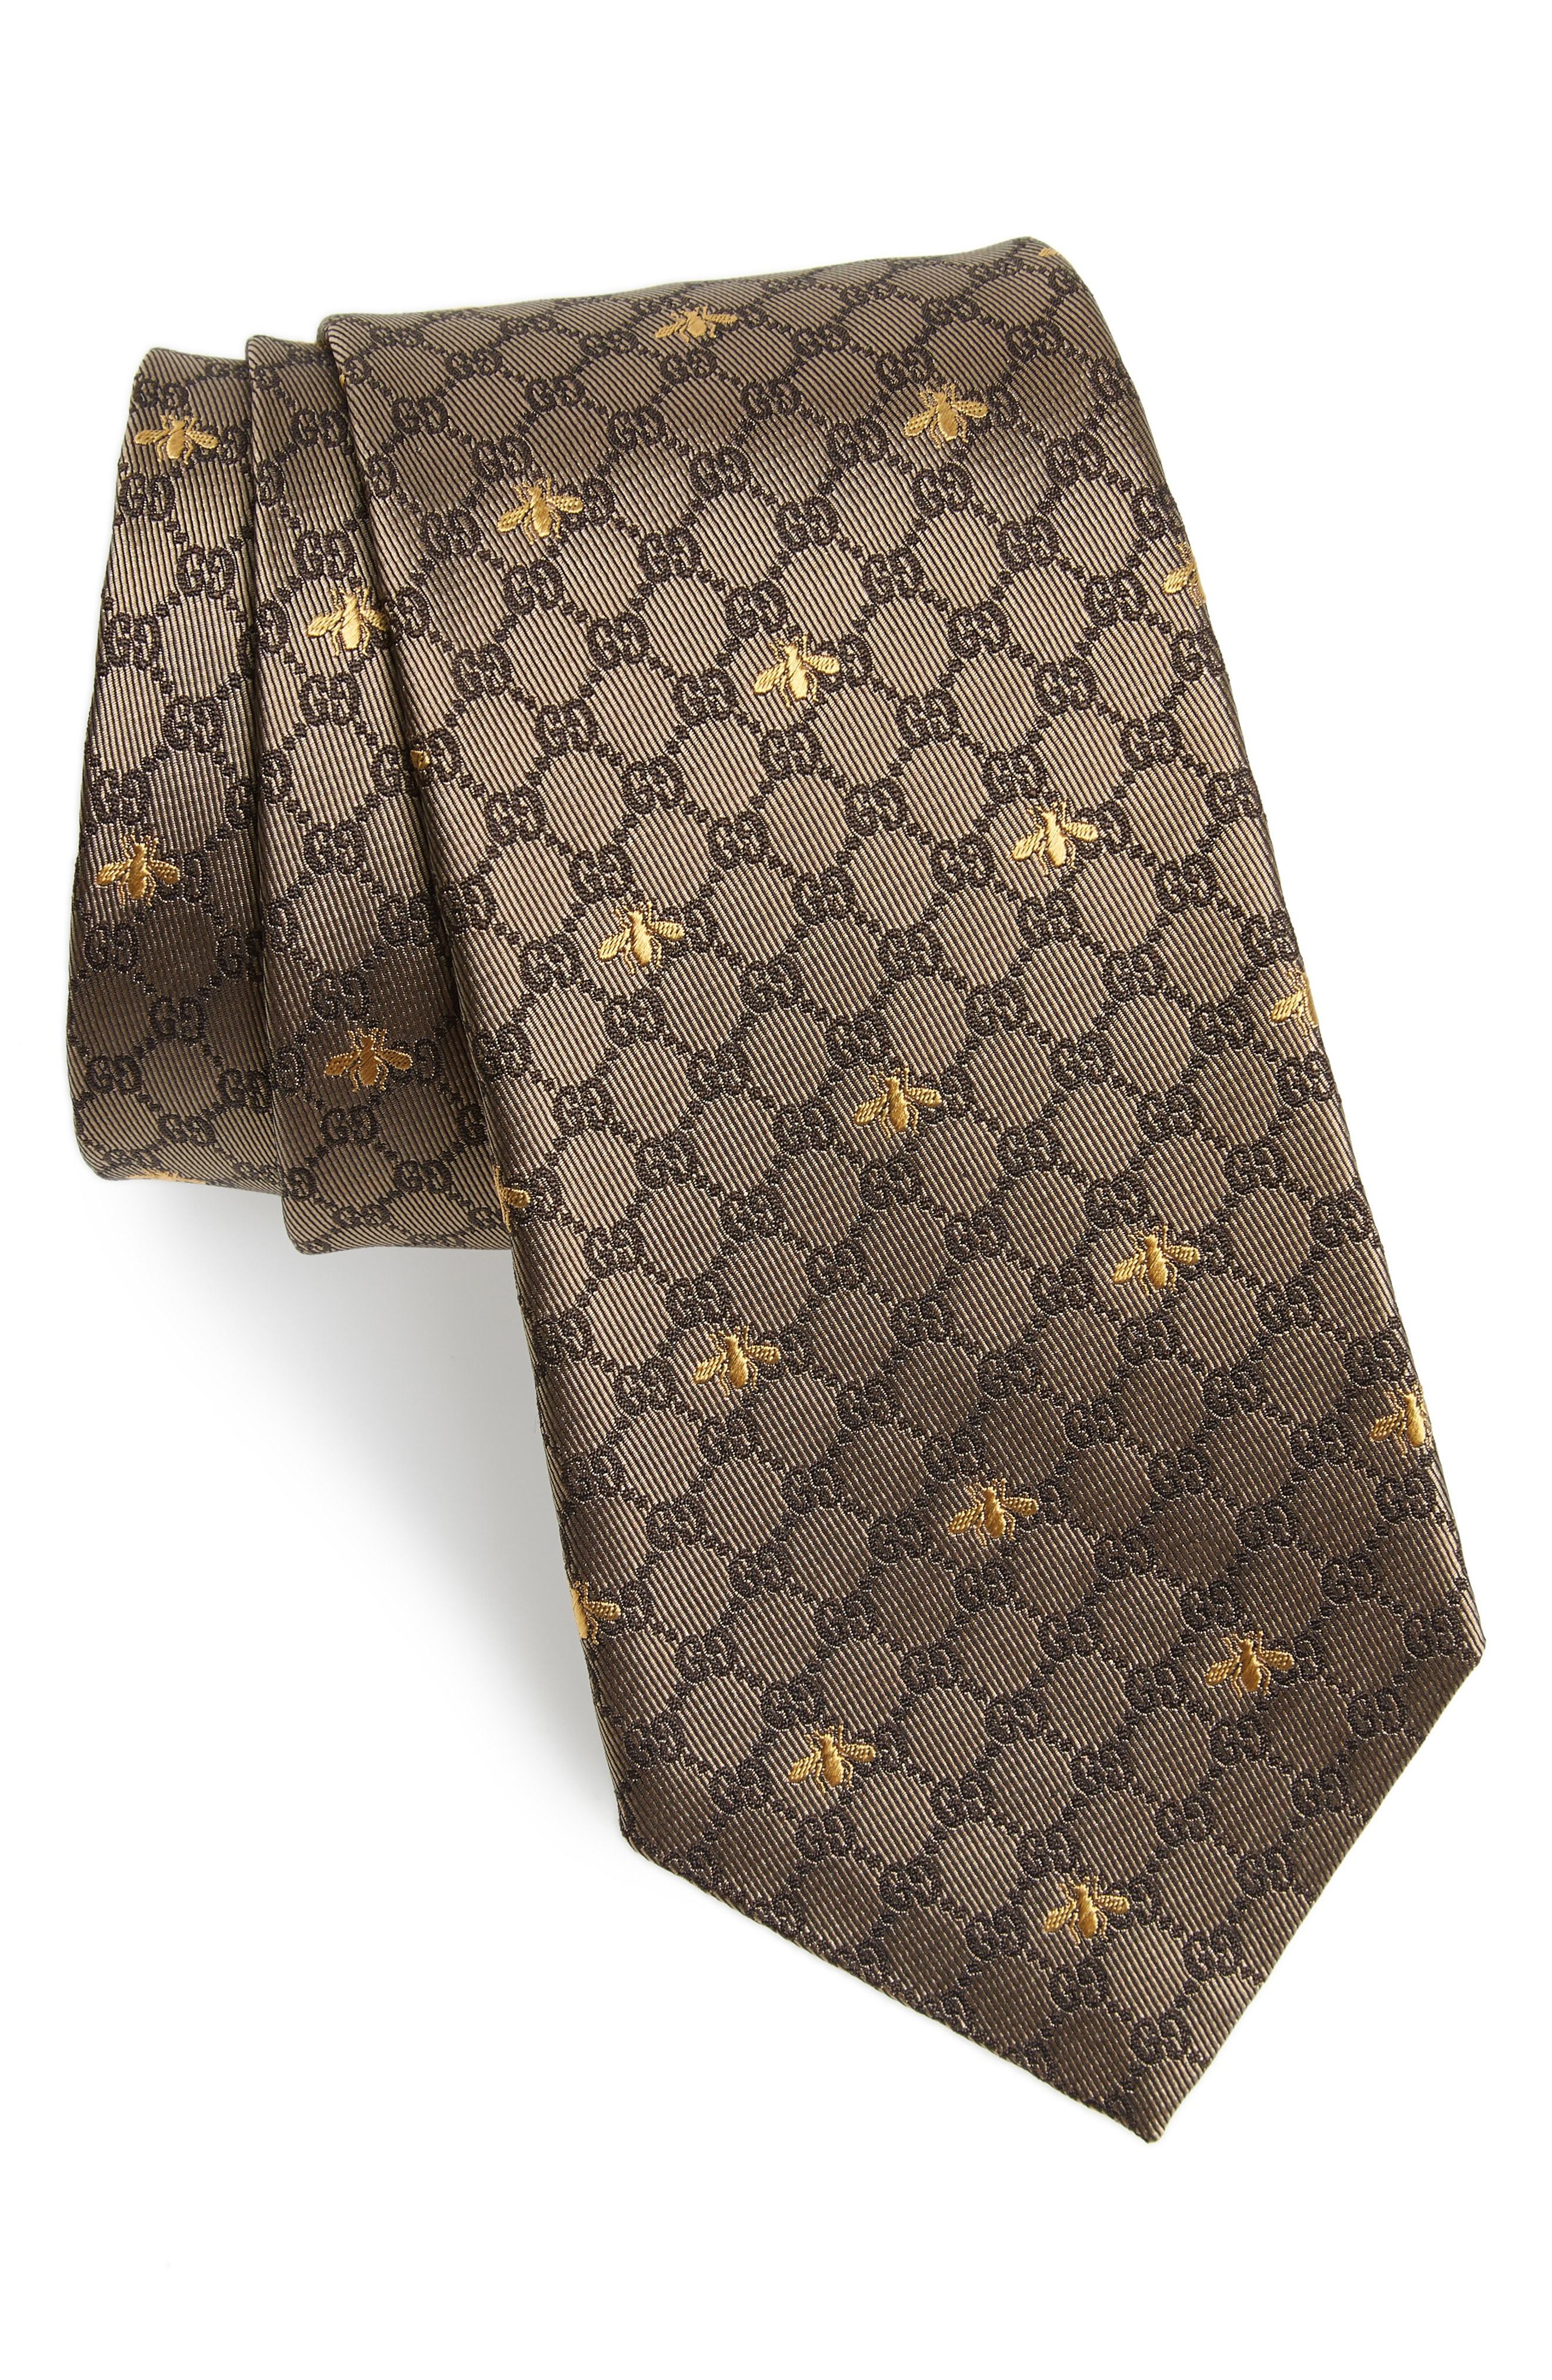 Paine Gillic afbrudt Afbestille Gucci Gg Bee Silk Tie, $220 | Nordstrom | Lookastic